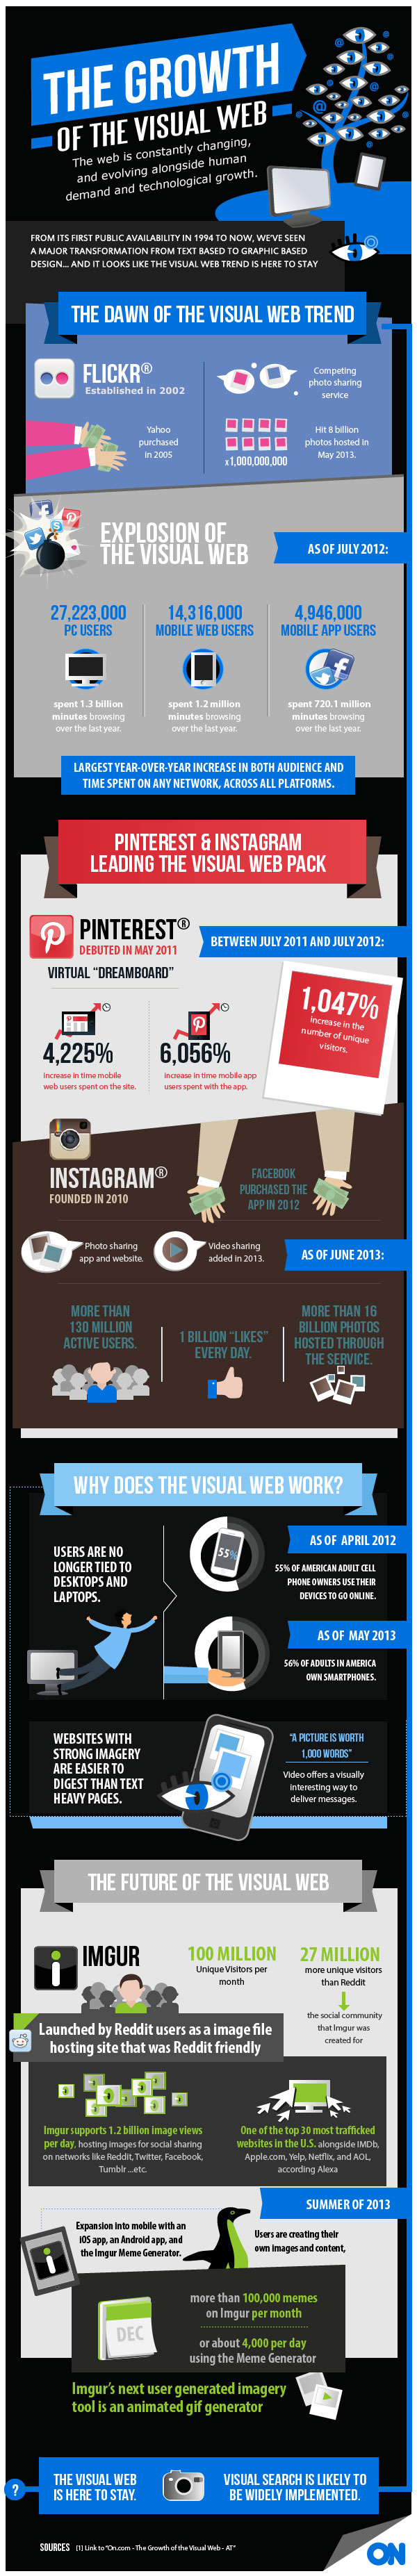 The statistics behind the visual web